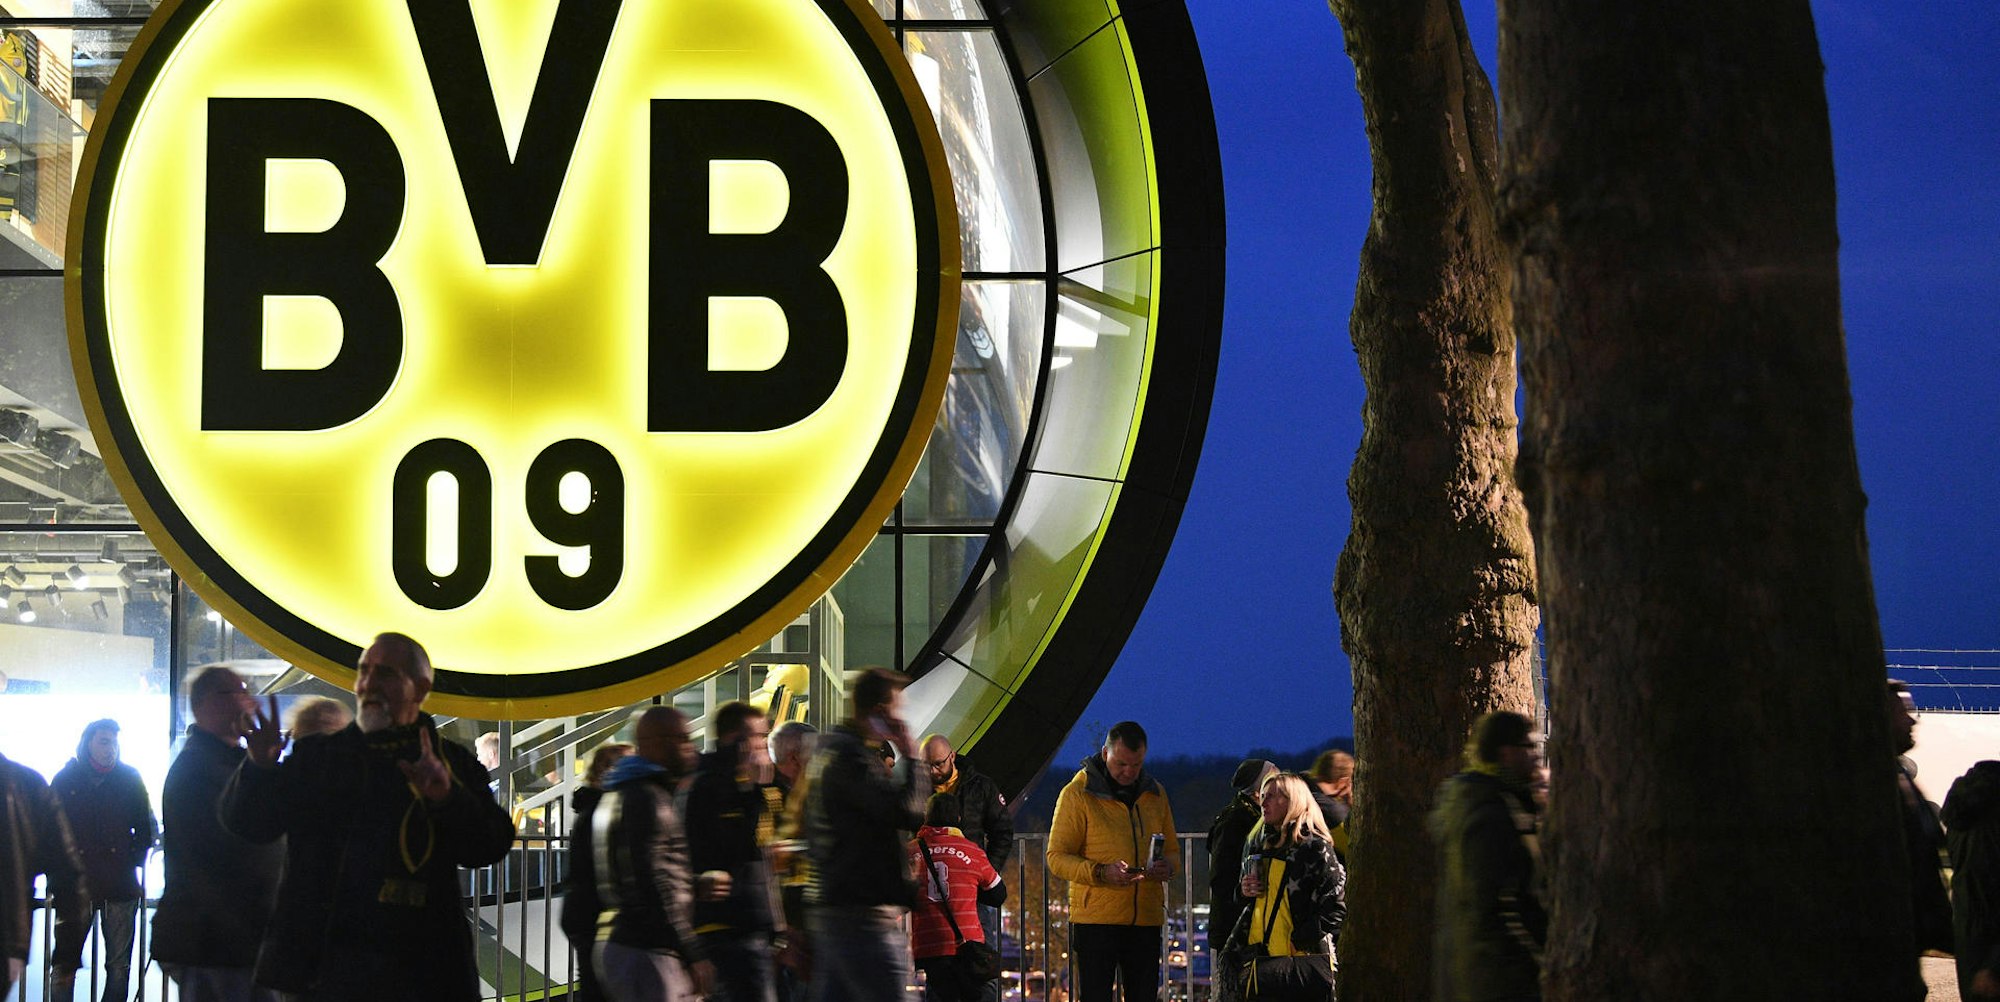 BVB Explosion Logo Stadion